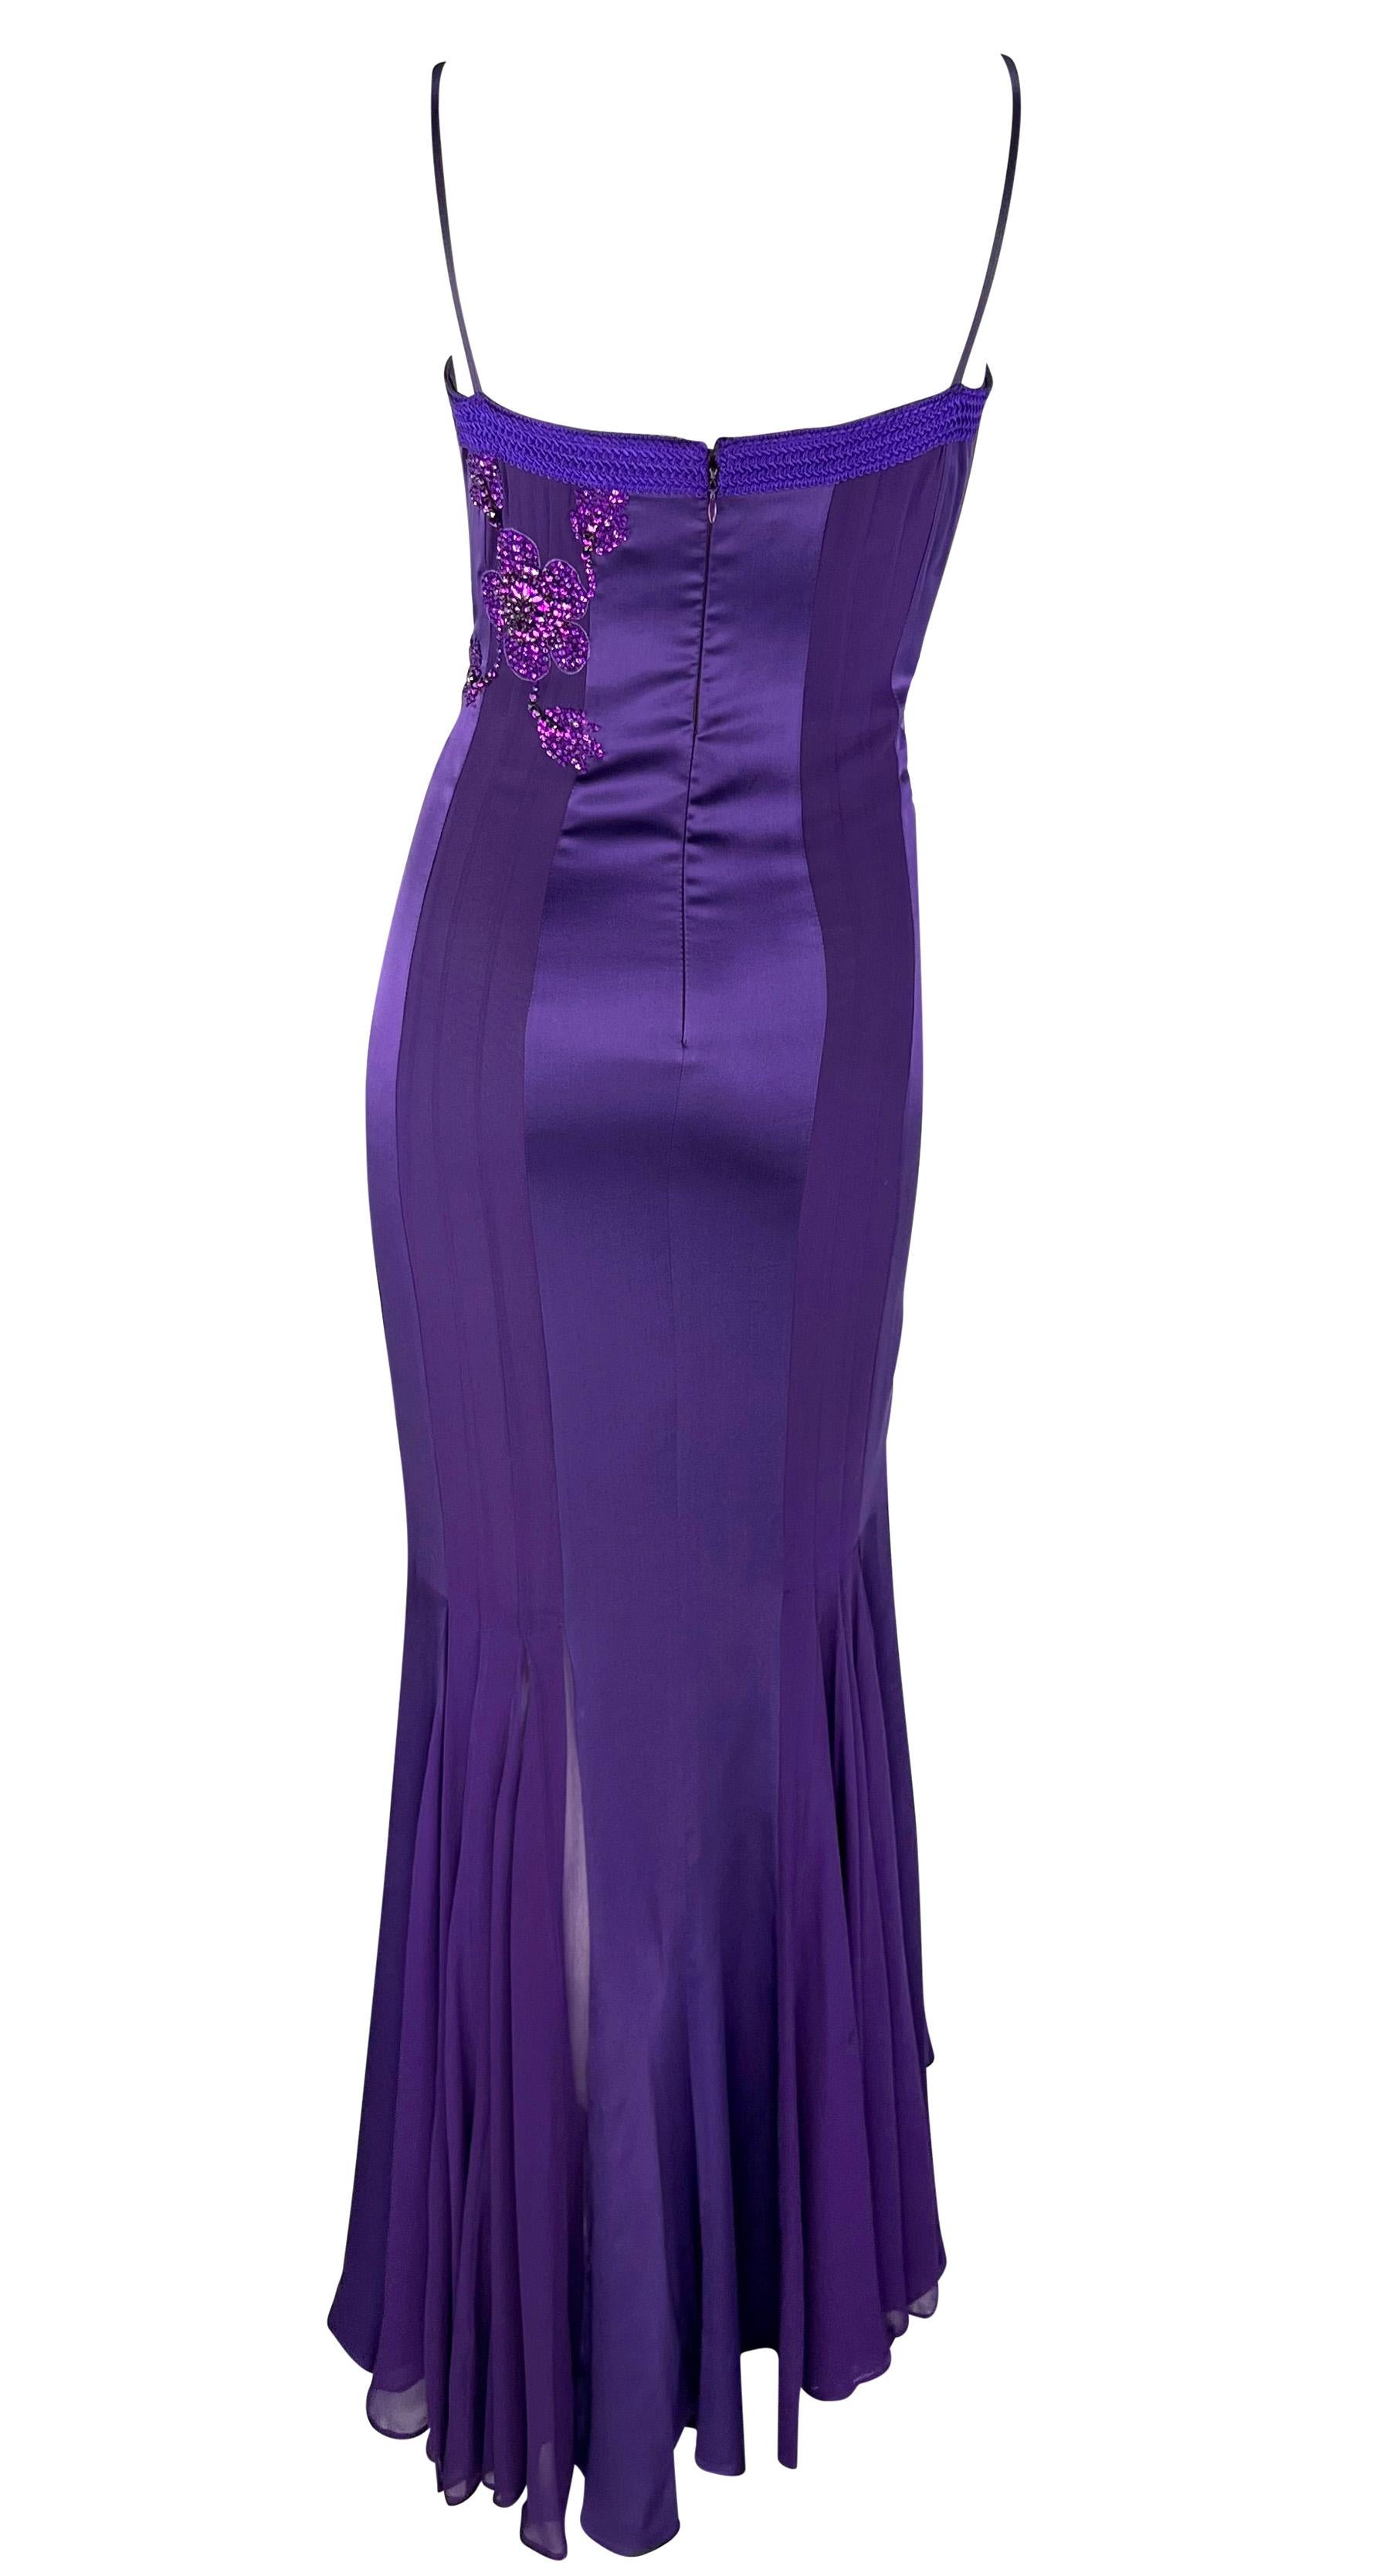 S/S 2005 Emanuel Ungaro by Giambattista Valli Rhinestone Purple Lace-Up Gown For Sale 7